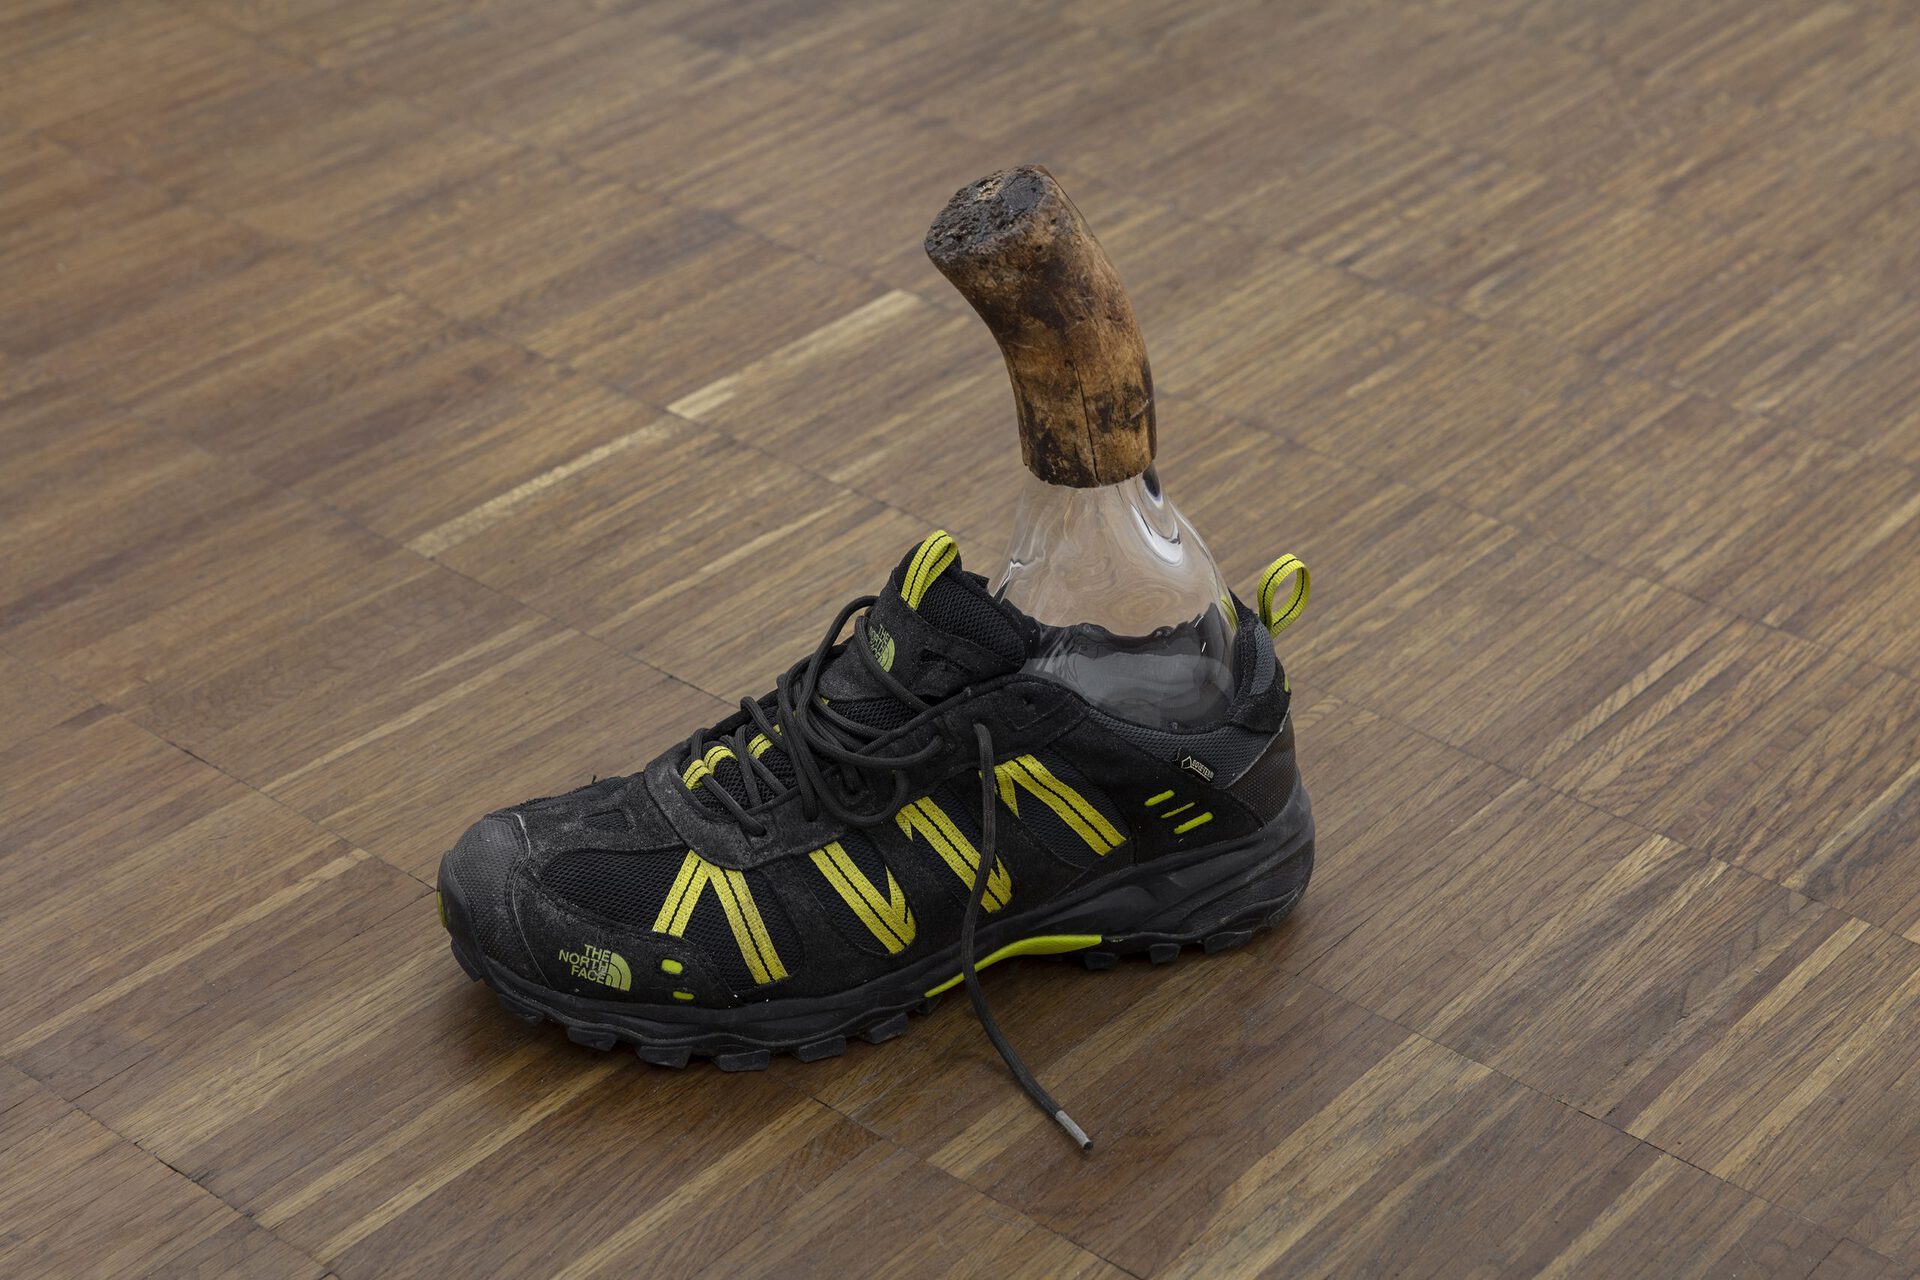 Olof Marsja, Gore Foot II, 2022 (Glass, shoe, wood, copper, PL glue, 31 x 27 x 10 cm).